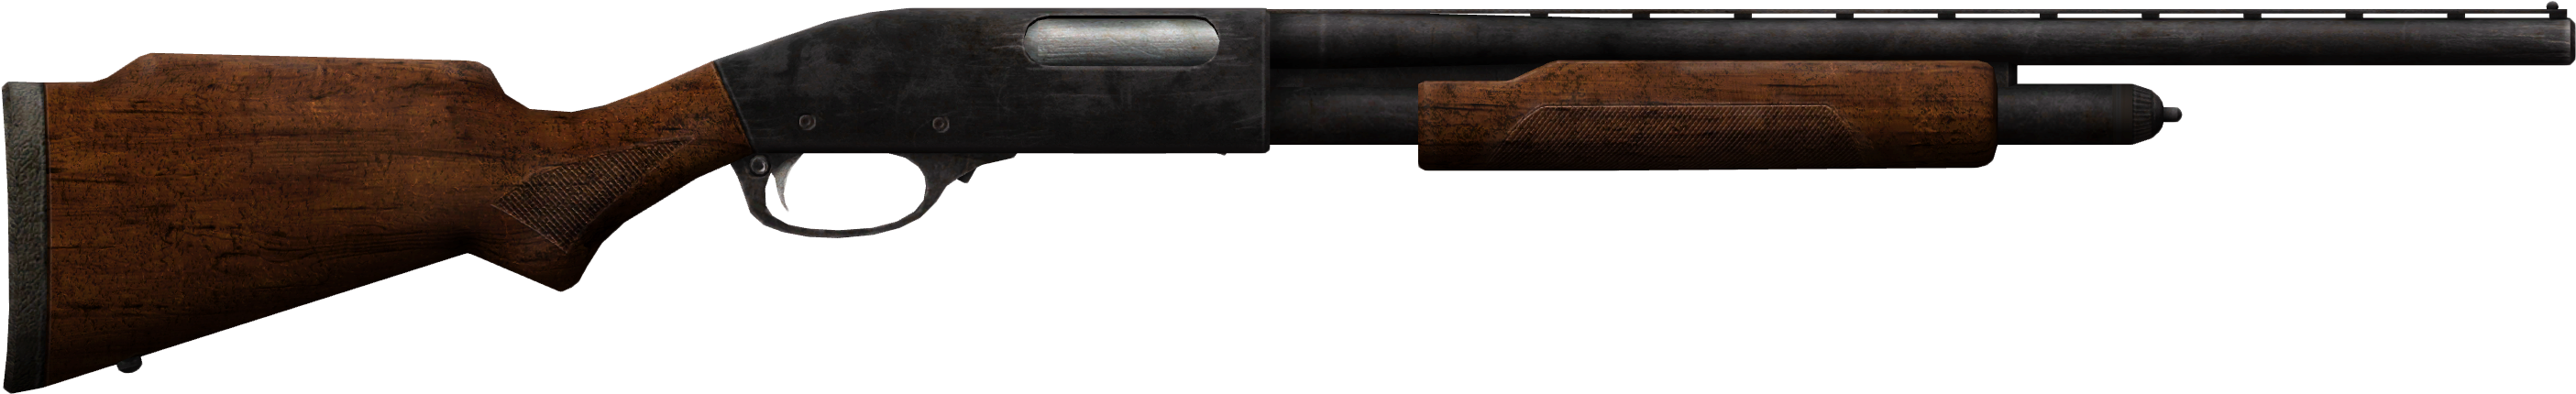 Latest Images - Fallout New Vegas Hunting Shotgun (3000x800)